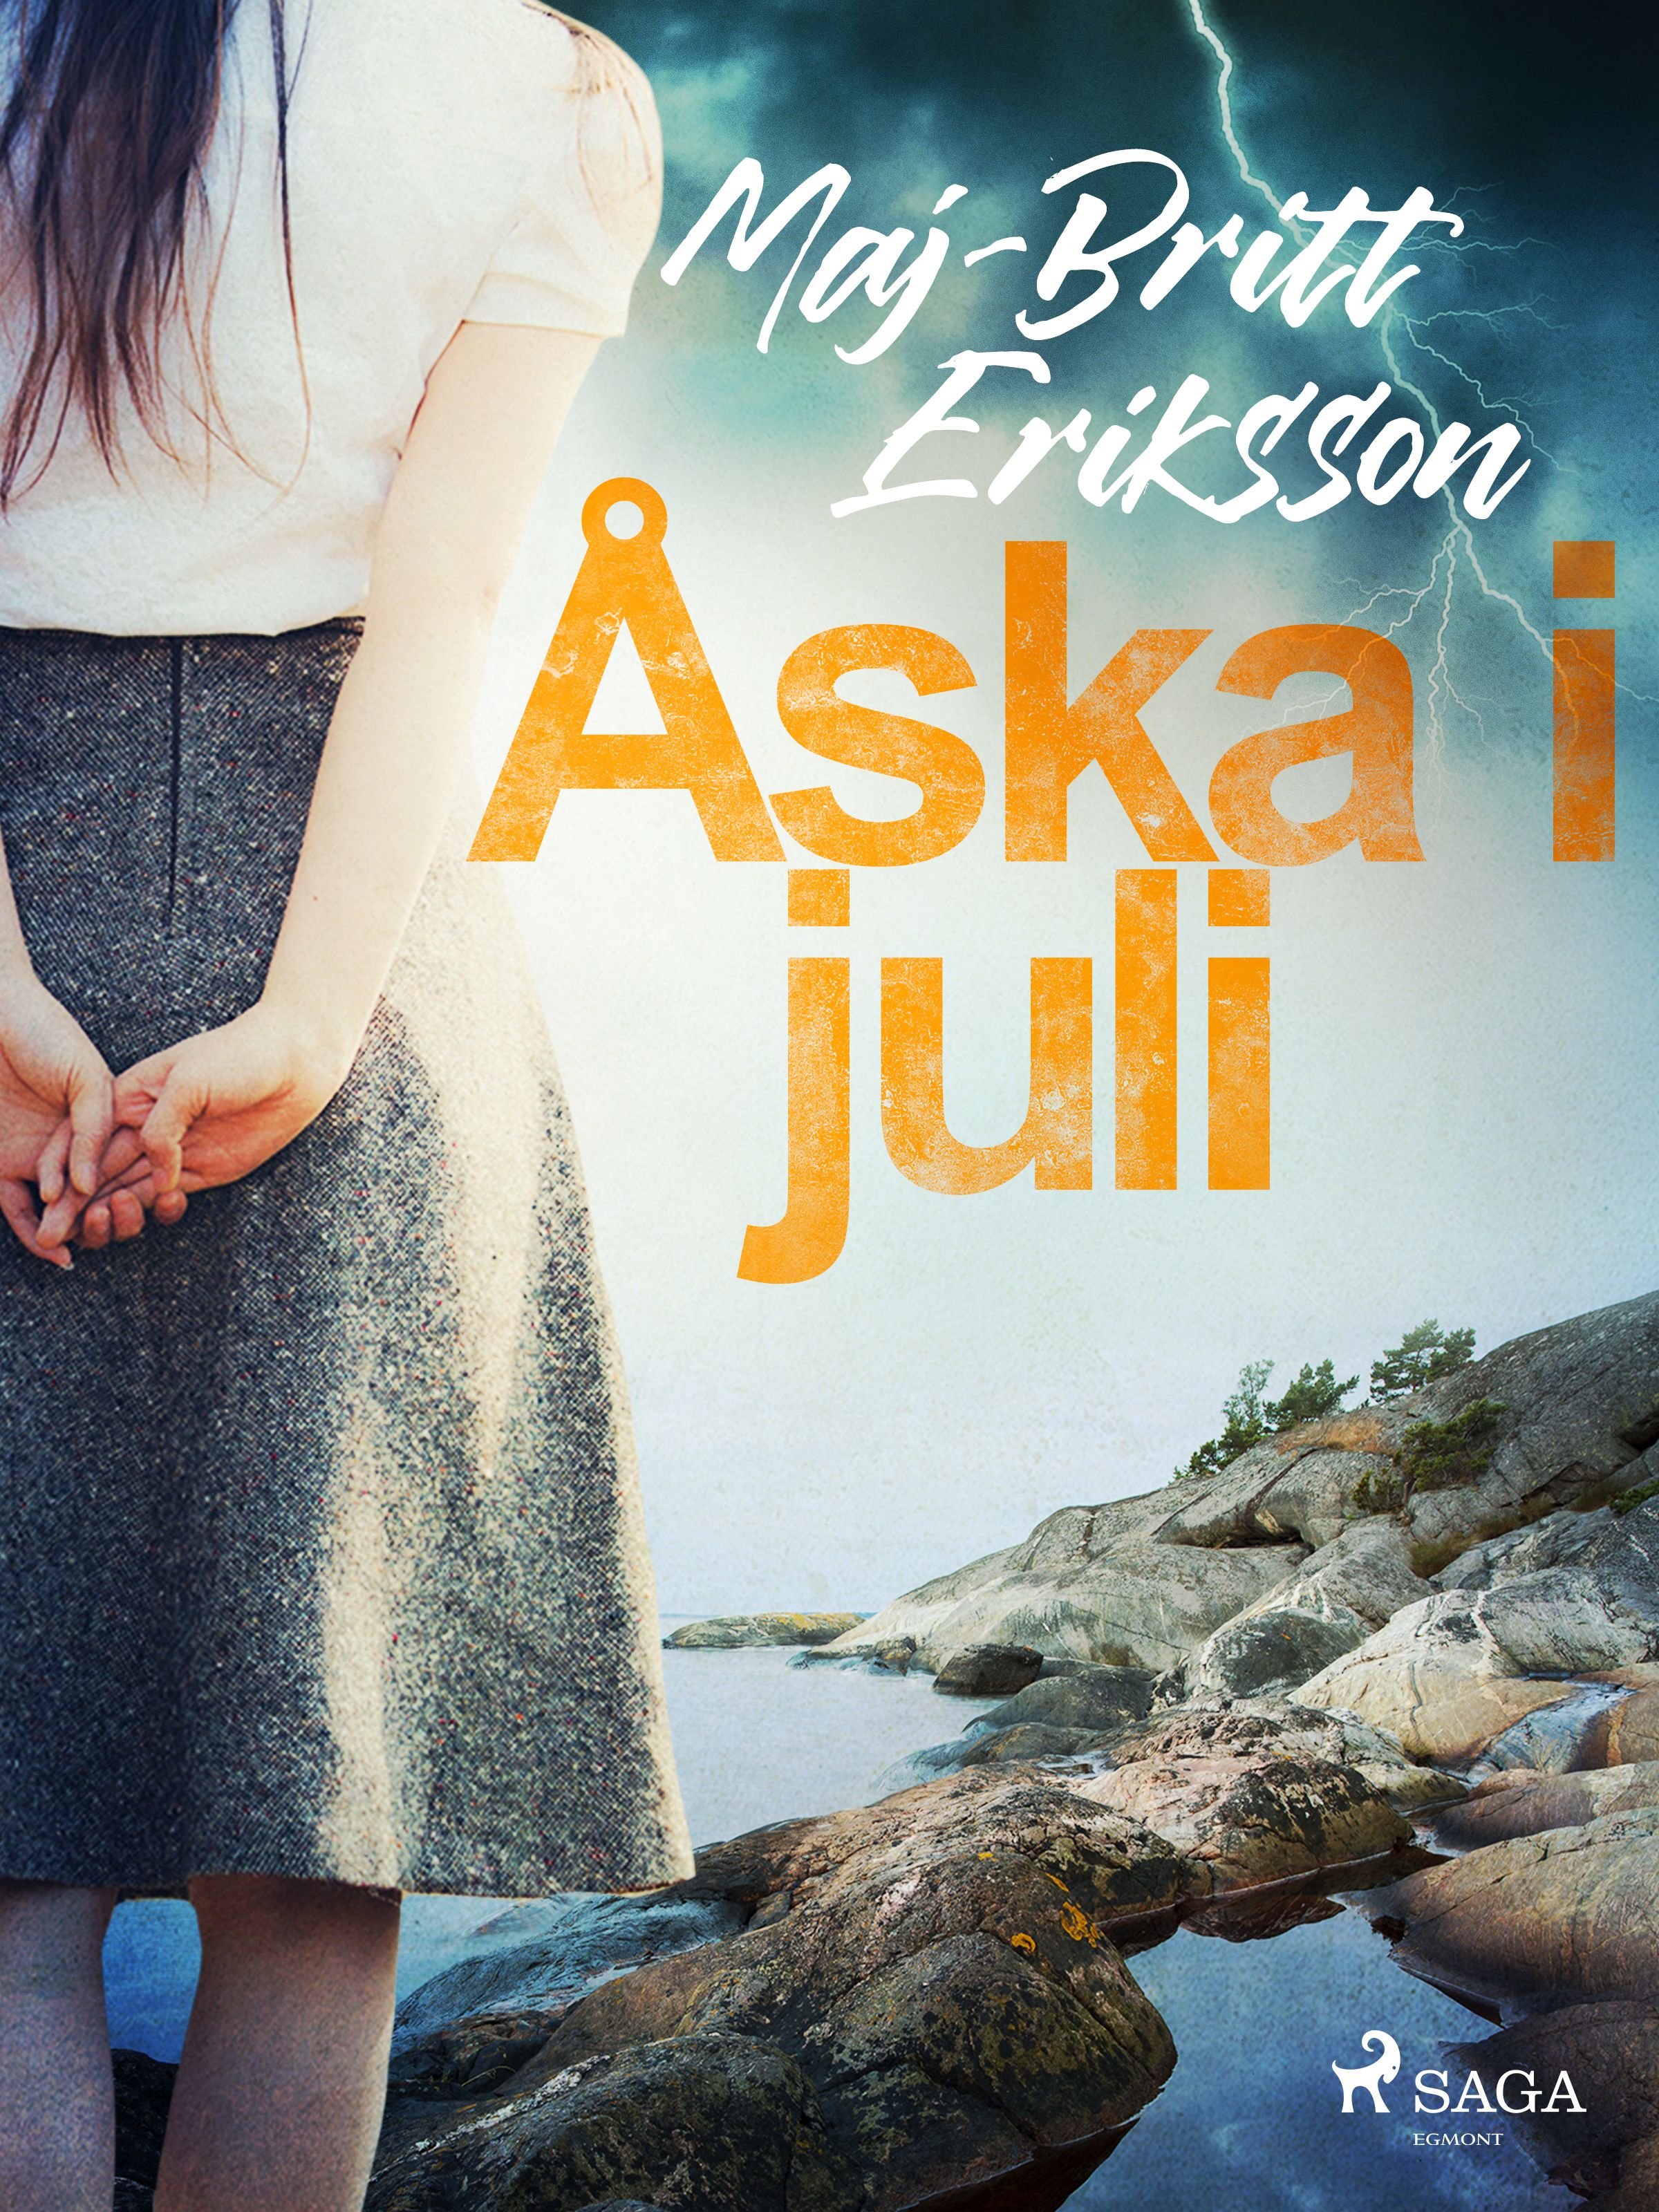 Åska i juli, e-bok av Maj-Britt Eriksson